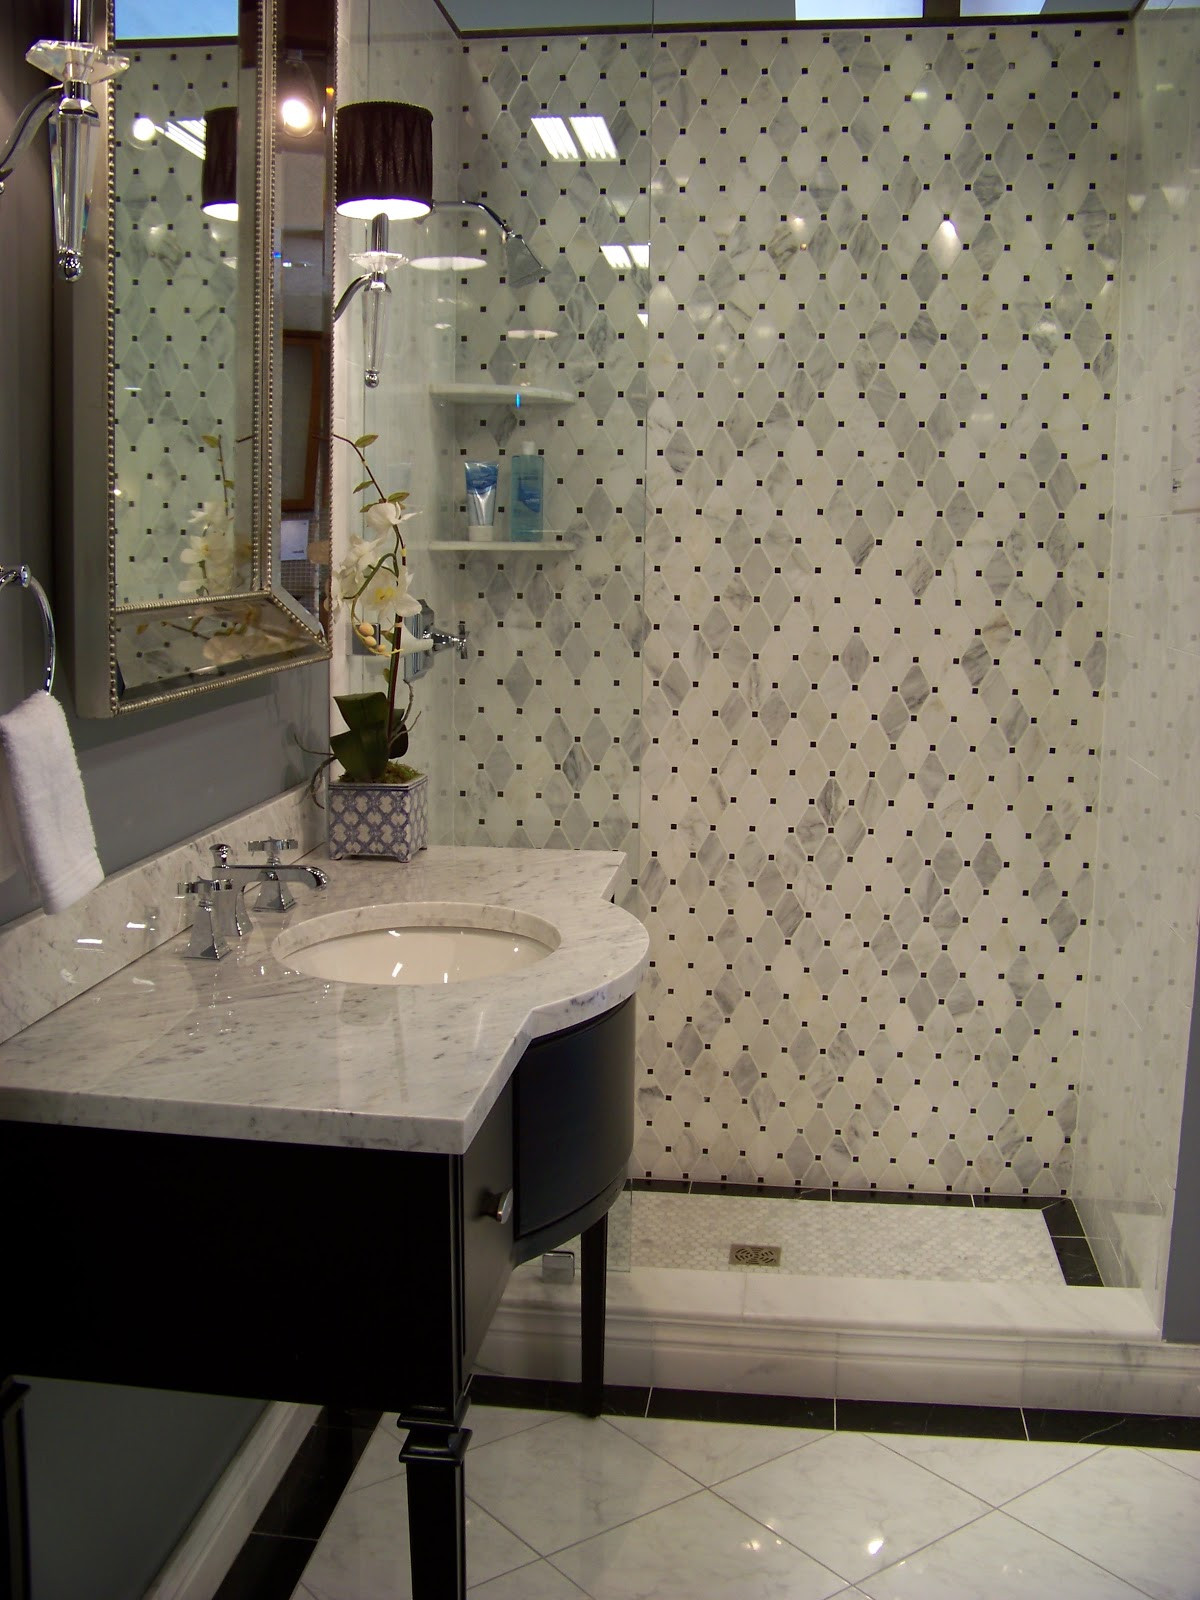 Bathroom Porcelain Tile
 Home Decor Bud ista Bathroom Inspiration The Tile Shop